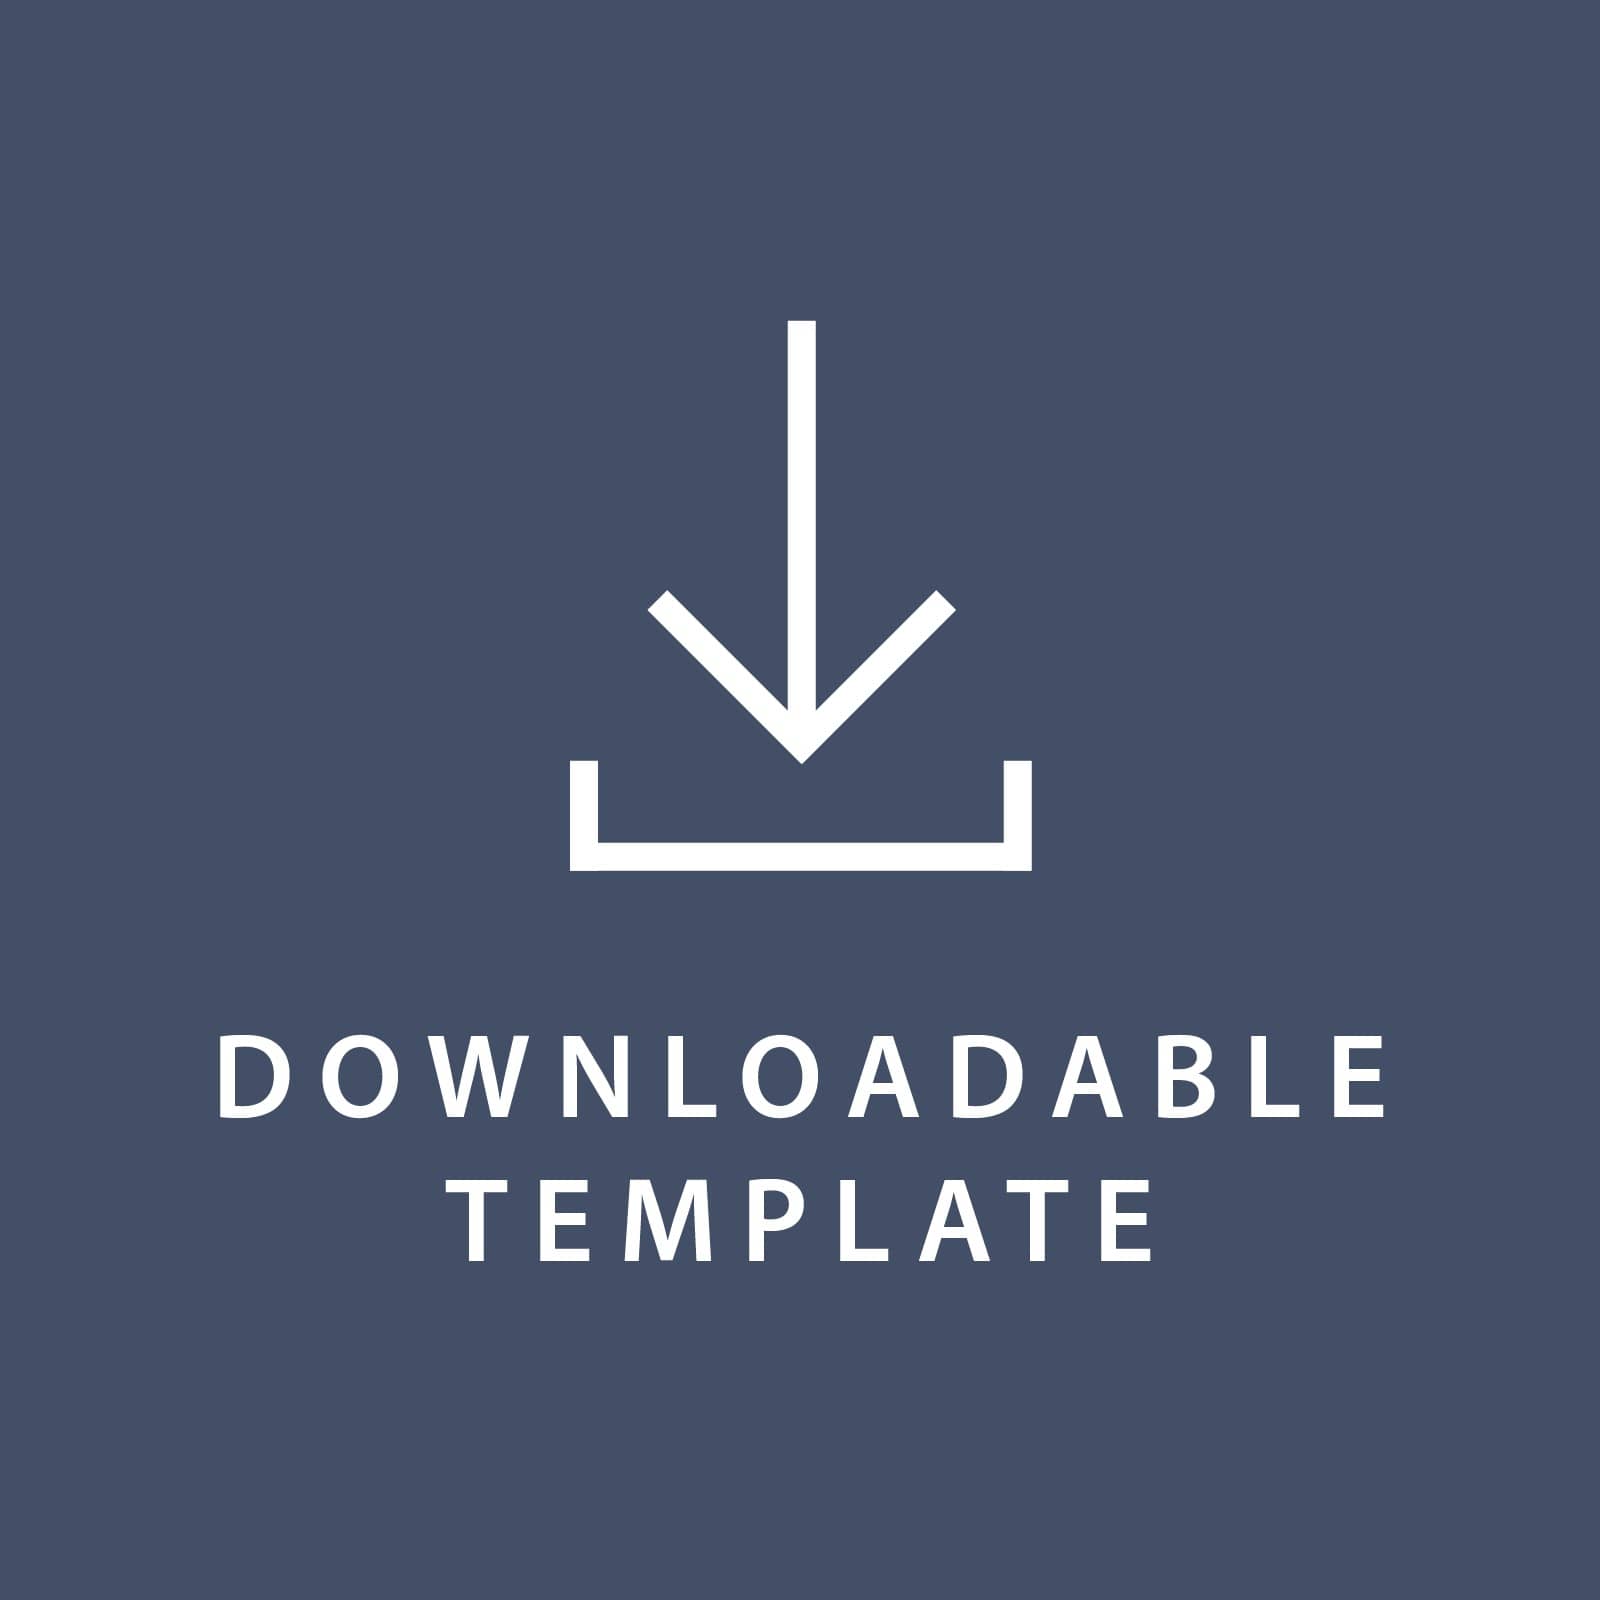 Template for 8.5 x 11 Labels Gartner Studios Template tmplt0902